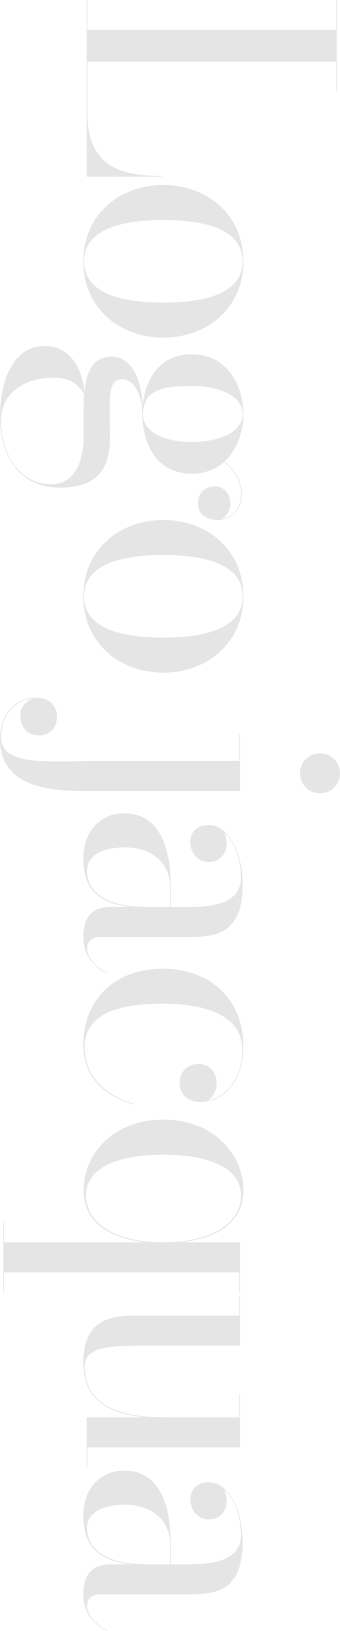 Logo jacqua